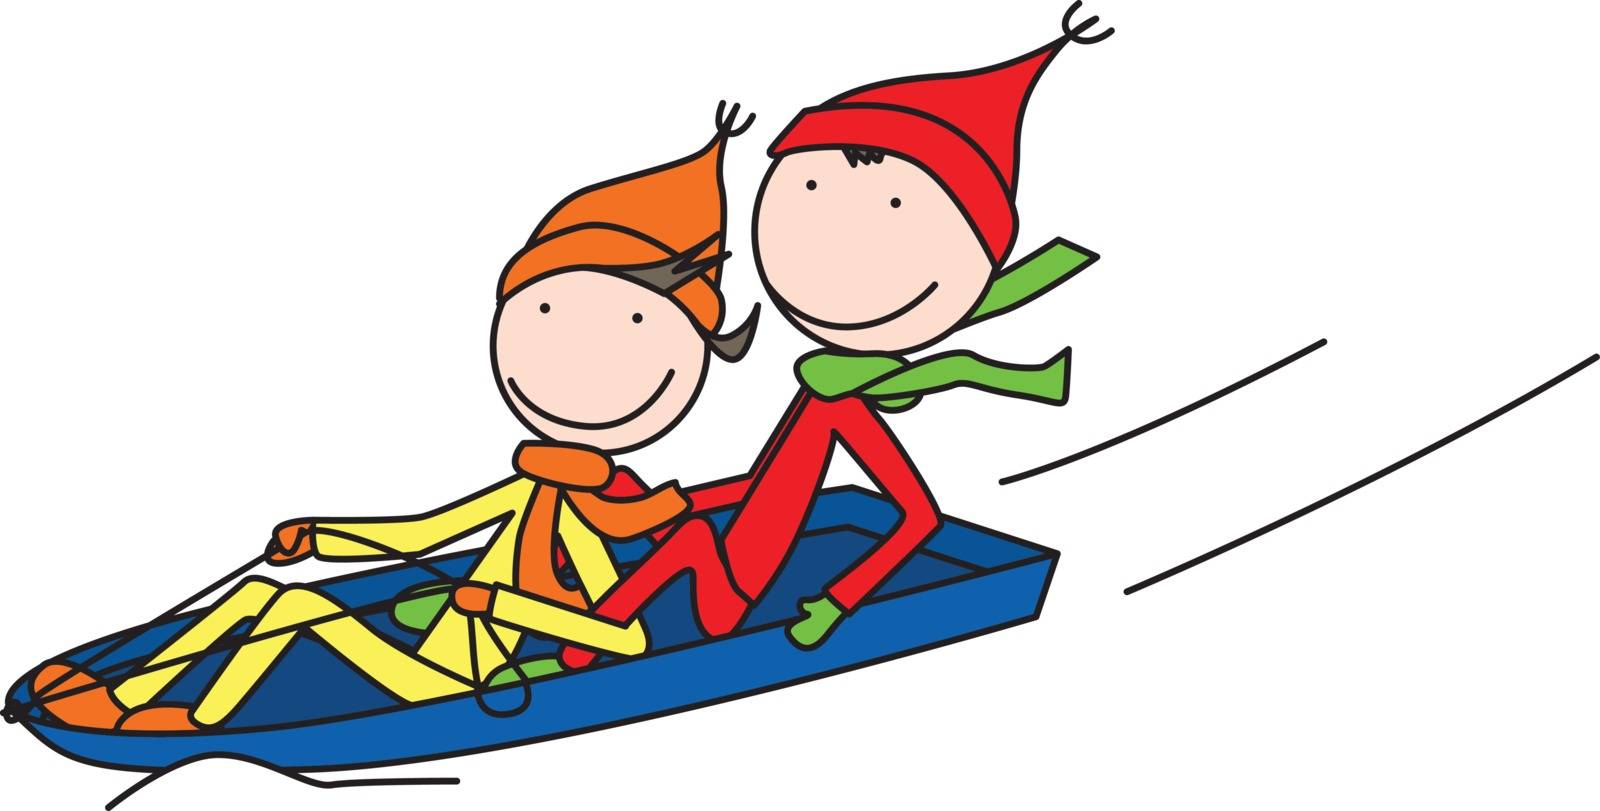 Illustration of happy kids sledding in winter